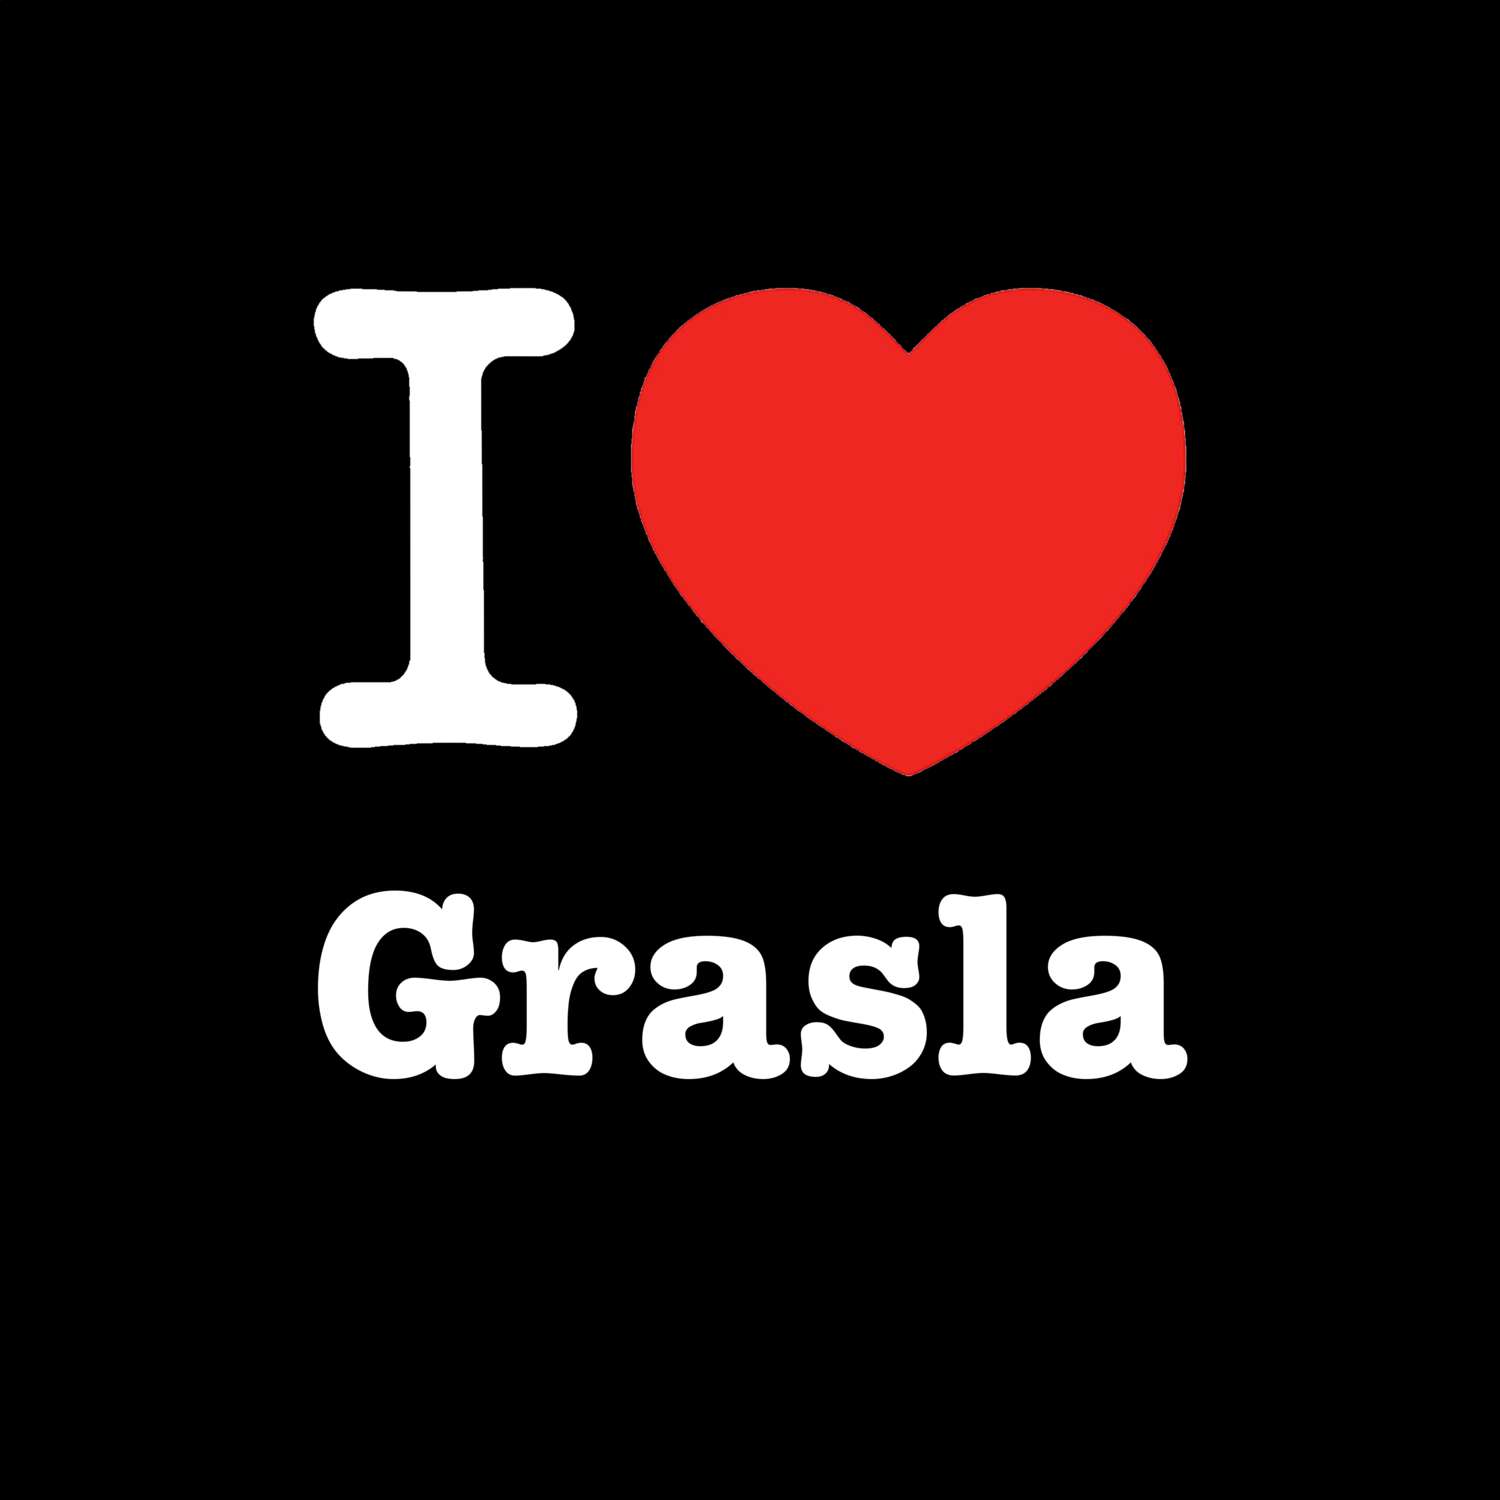 Grasla T-Shirt »I love«